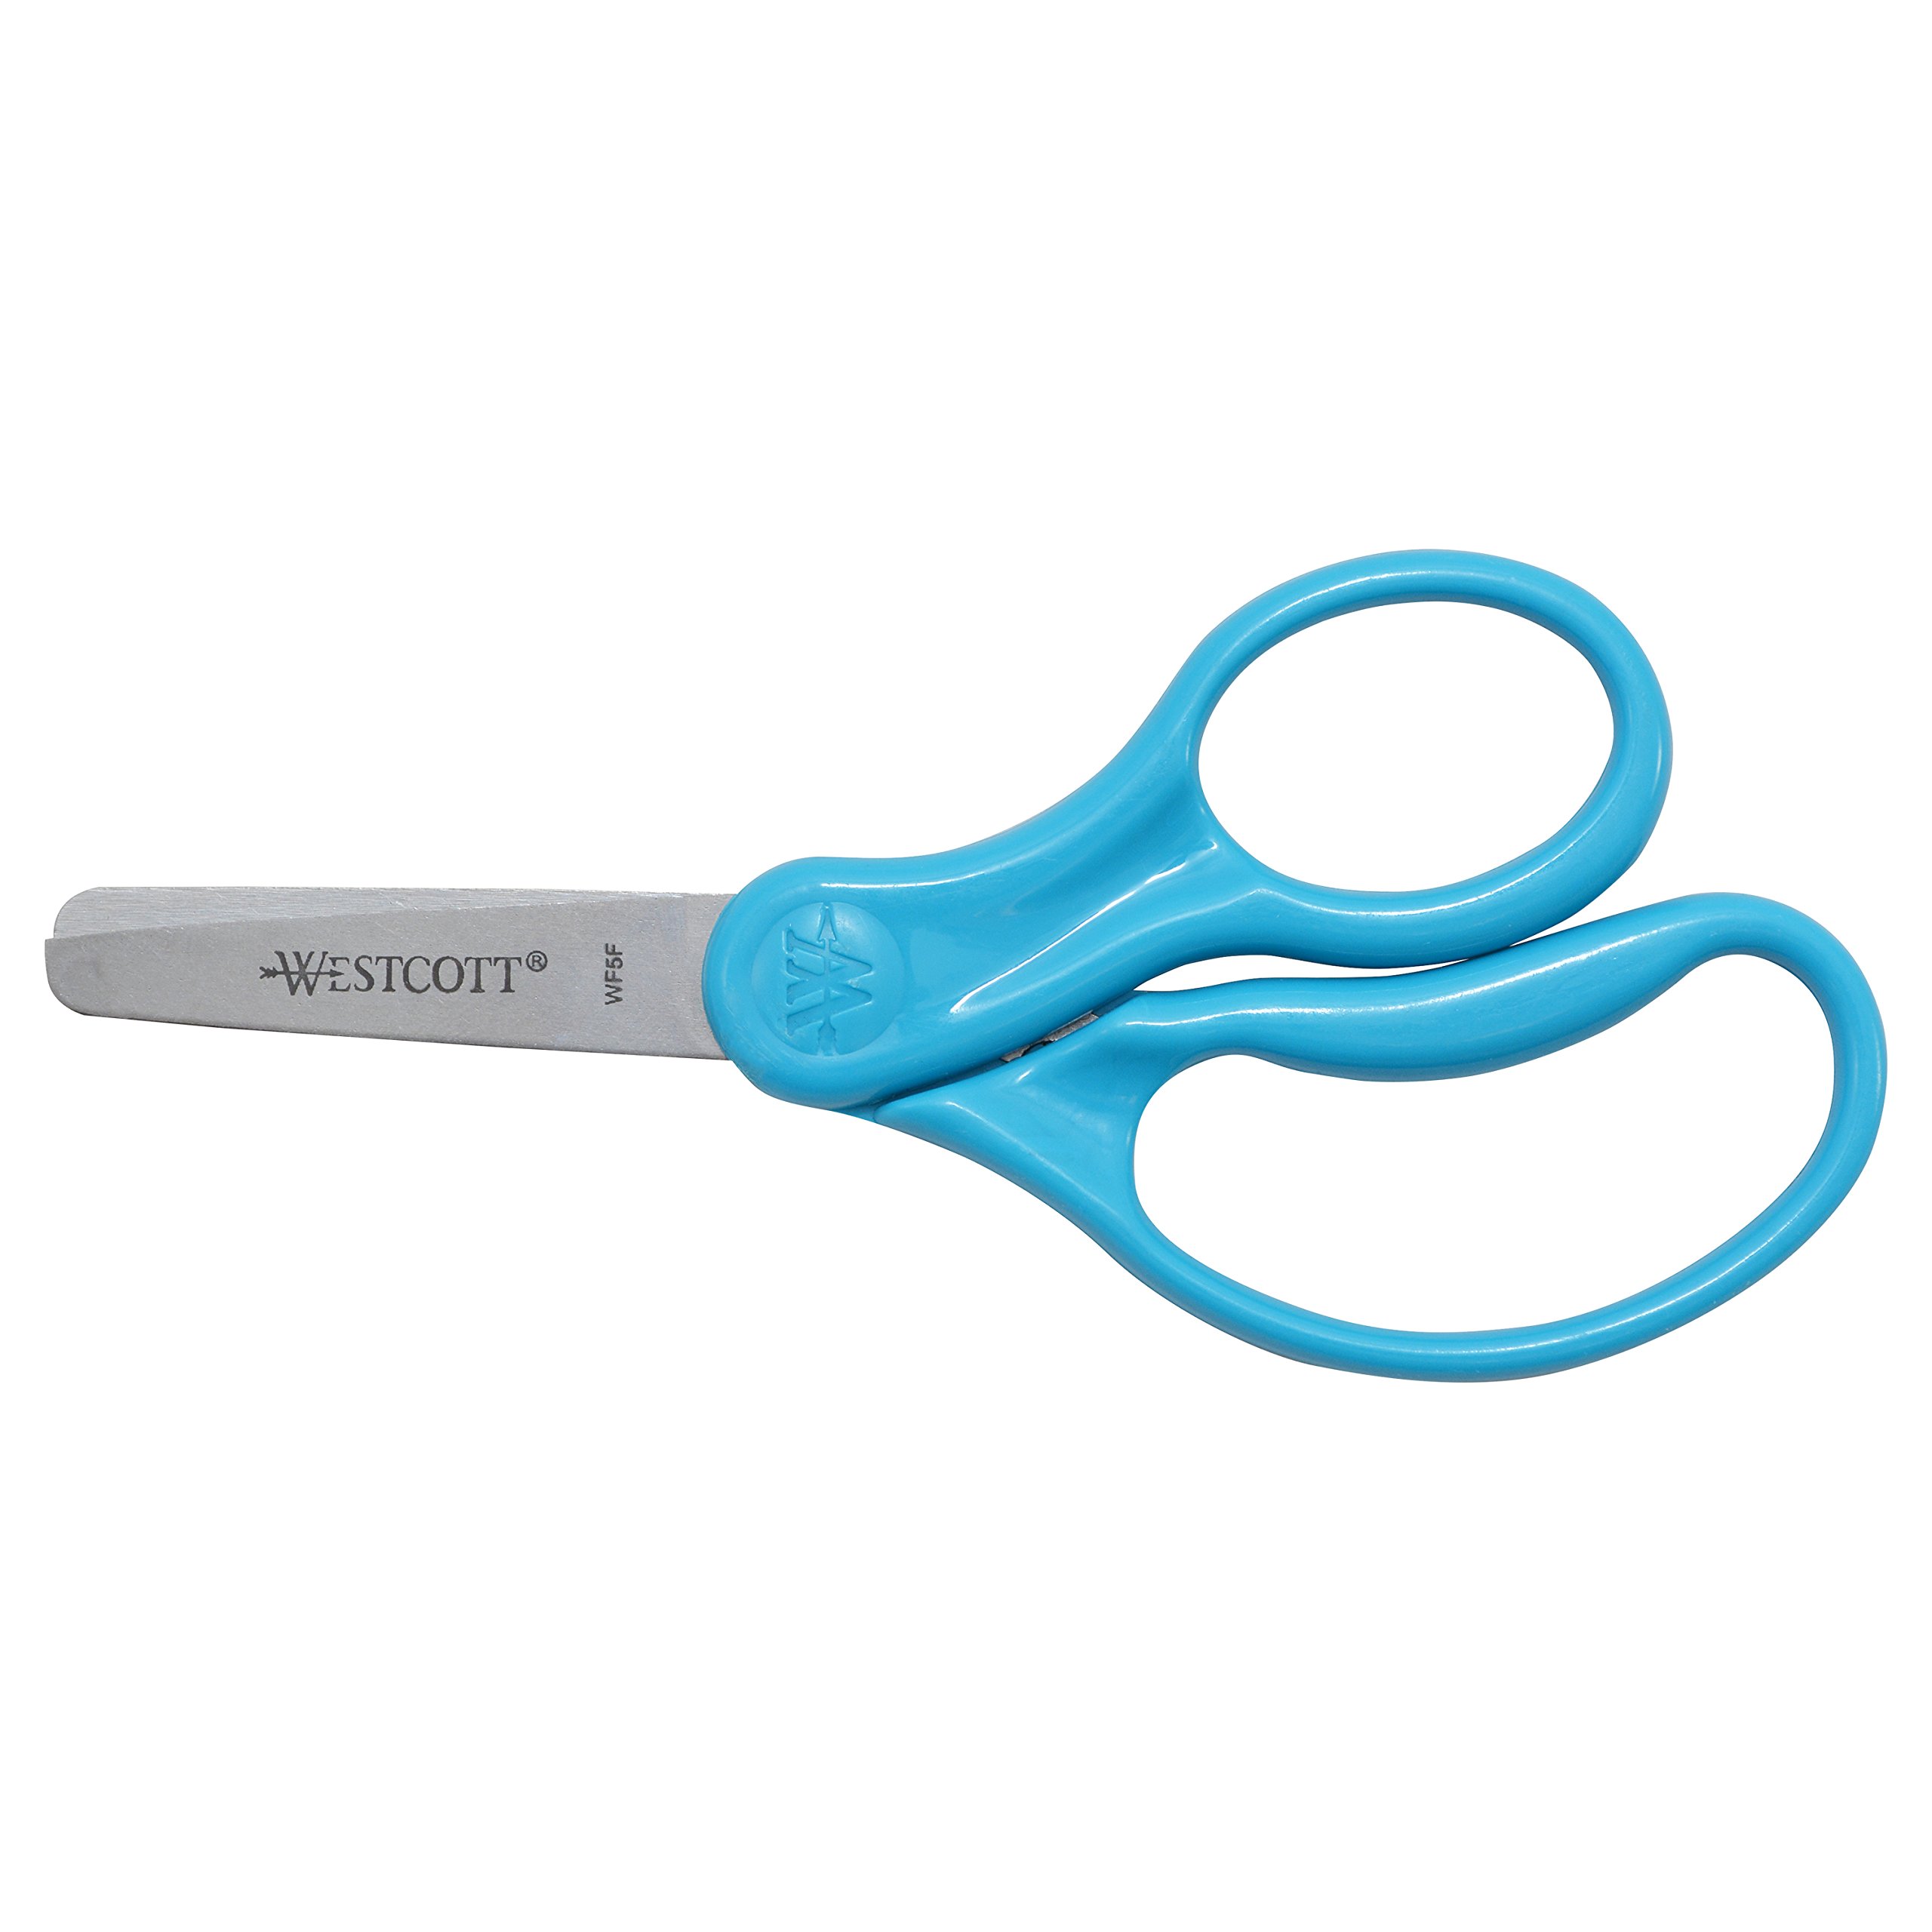 Westcott 15968 Right- and Left-Handed Scissors, Kids' Scissors, Ages 4-8,  5-Inch Blunt Tip, Neon Blue Neon Blue 5-Inch Blunt Tip